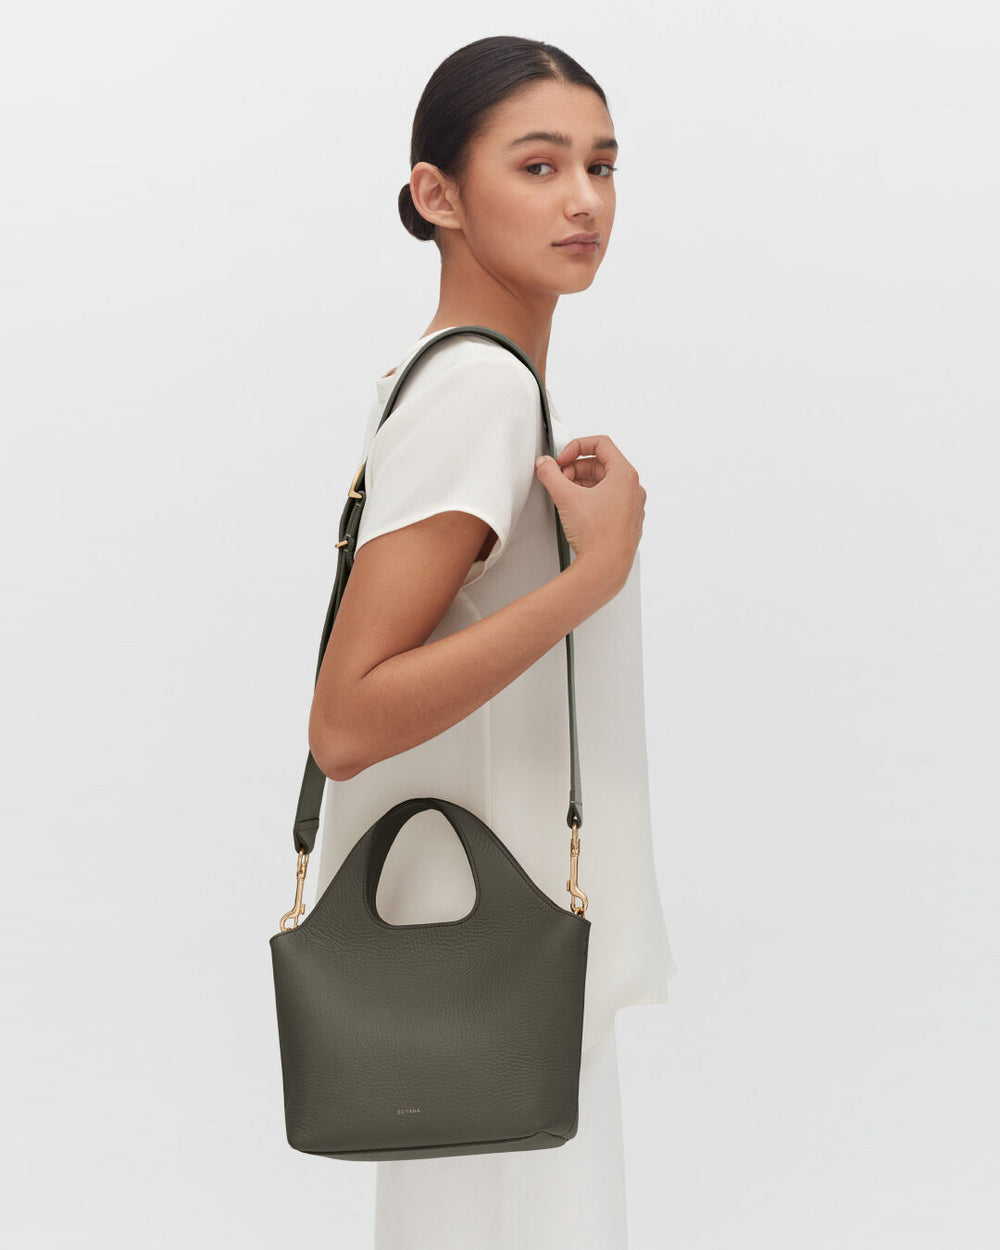 Woman standing sideways holding a handbag on her shoulder.